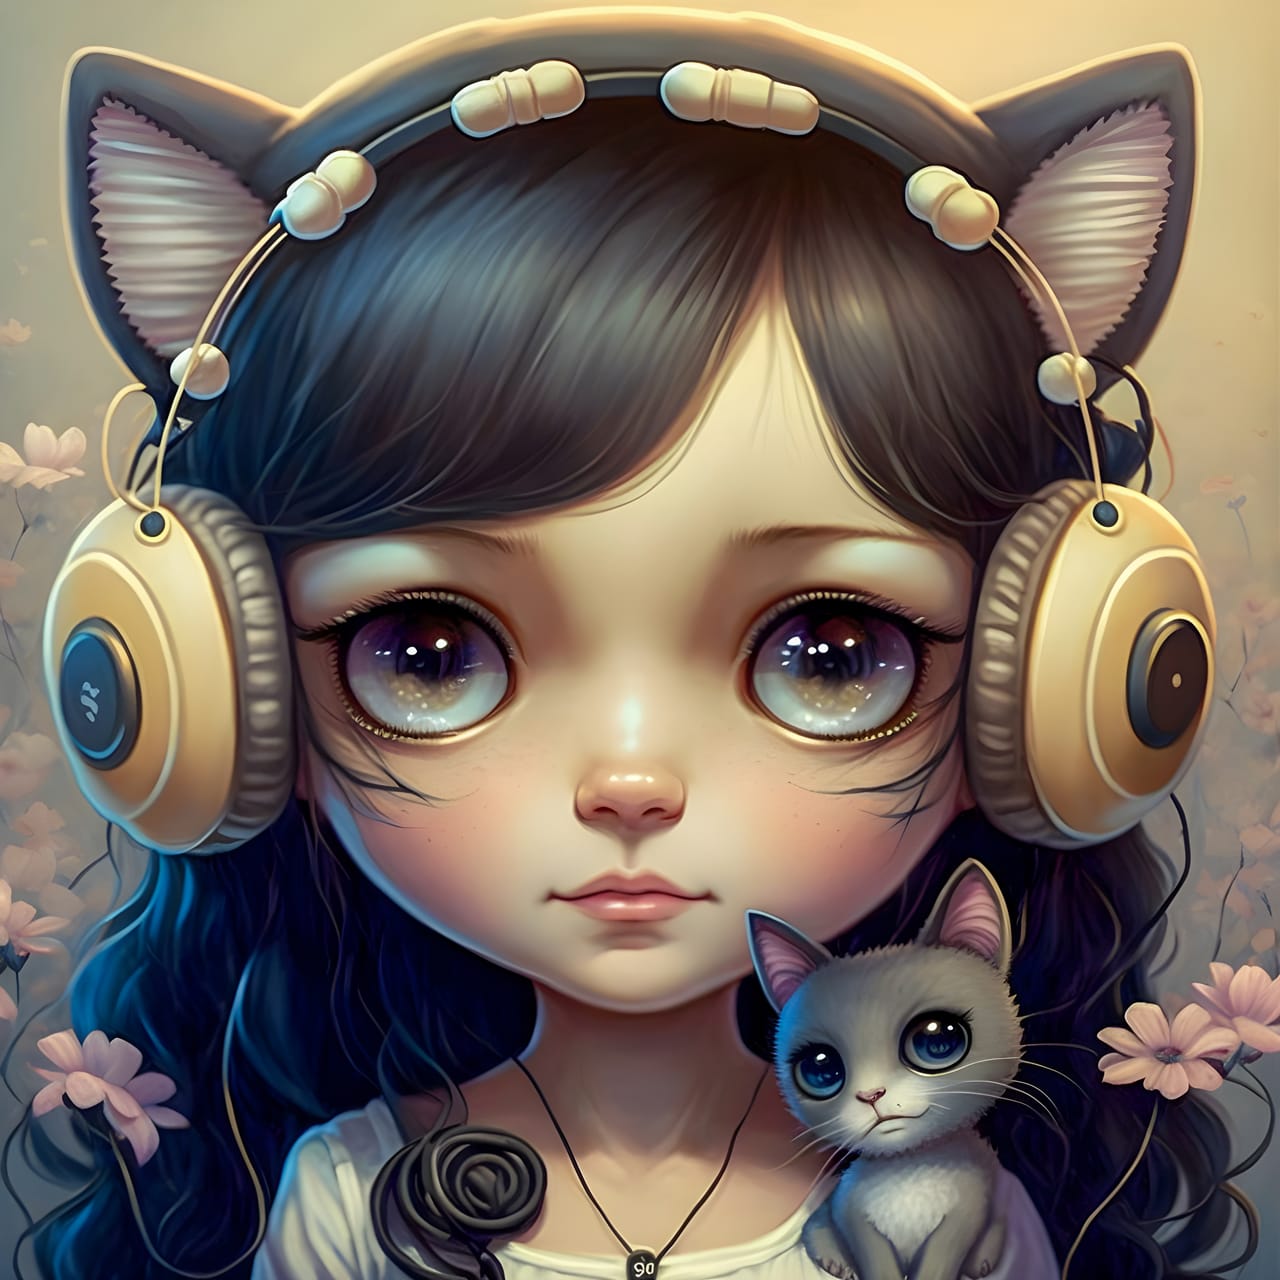 Cute kawaii anime brunette girl wearing headphones with cat